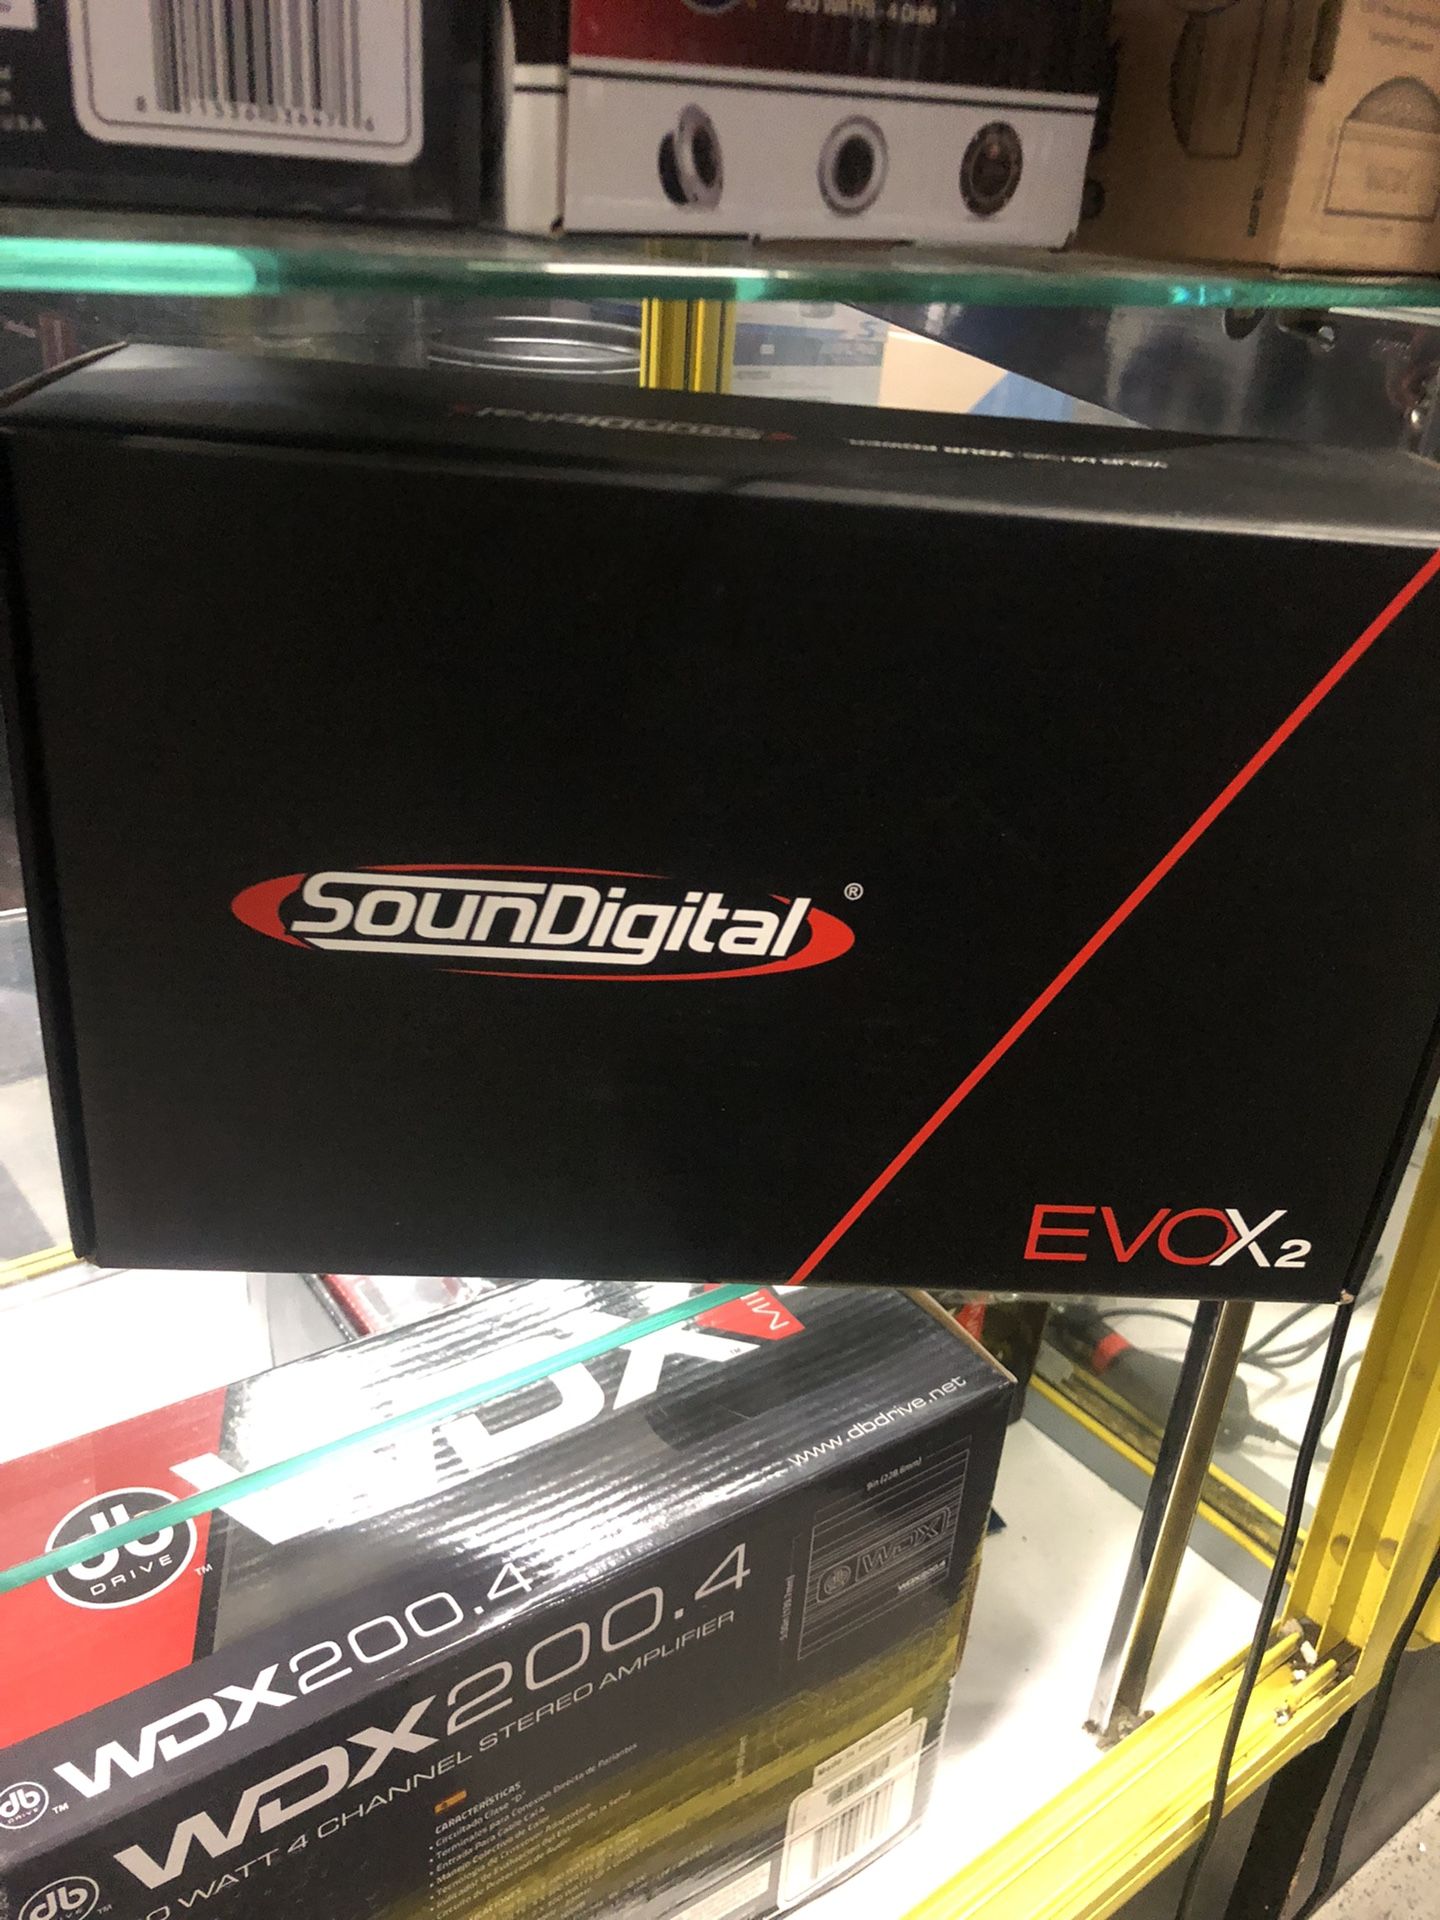 Soundigital EvoX2 3000.1 On Sale For 599.99